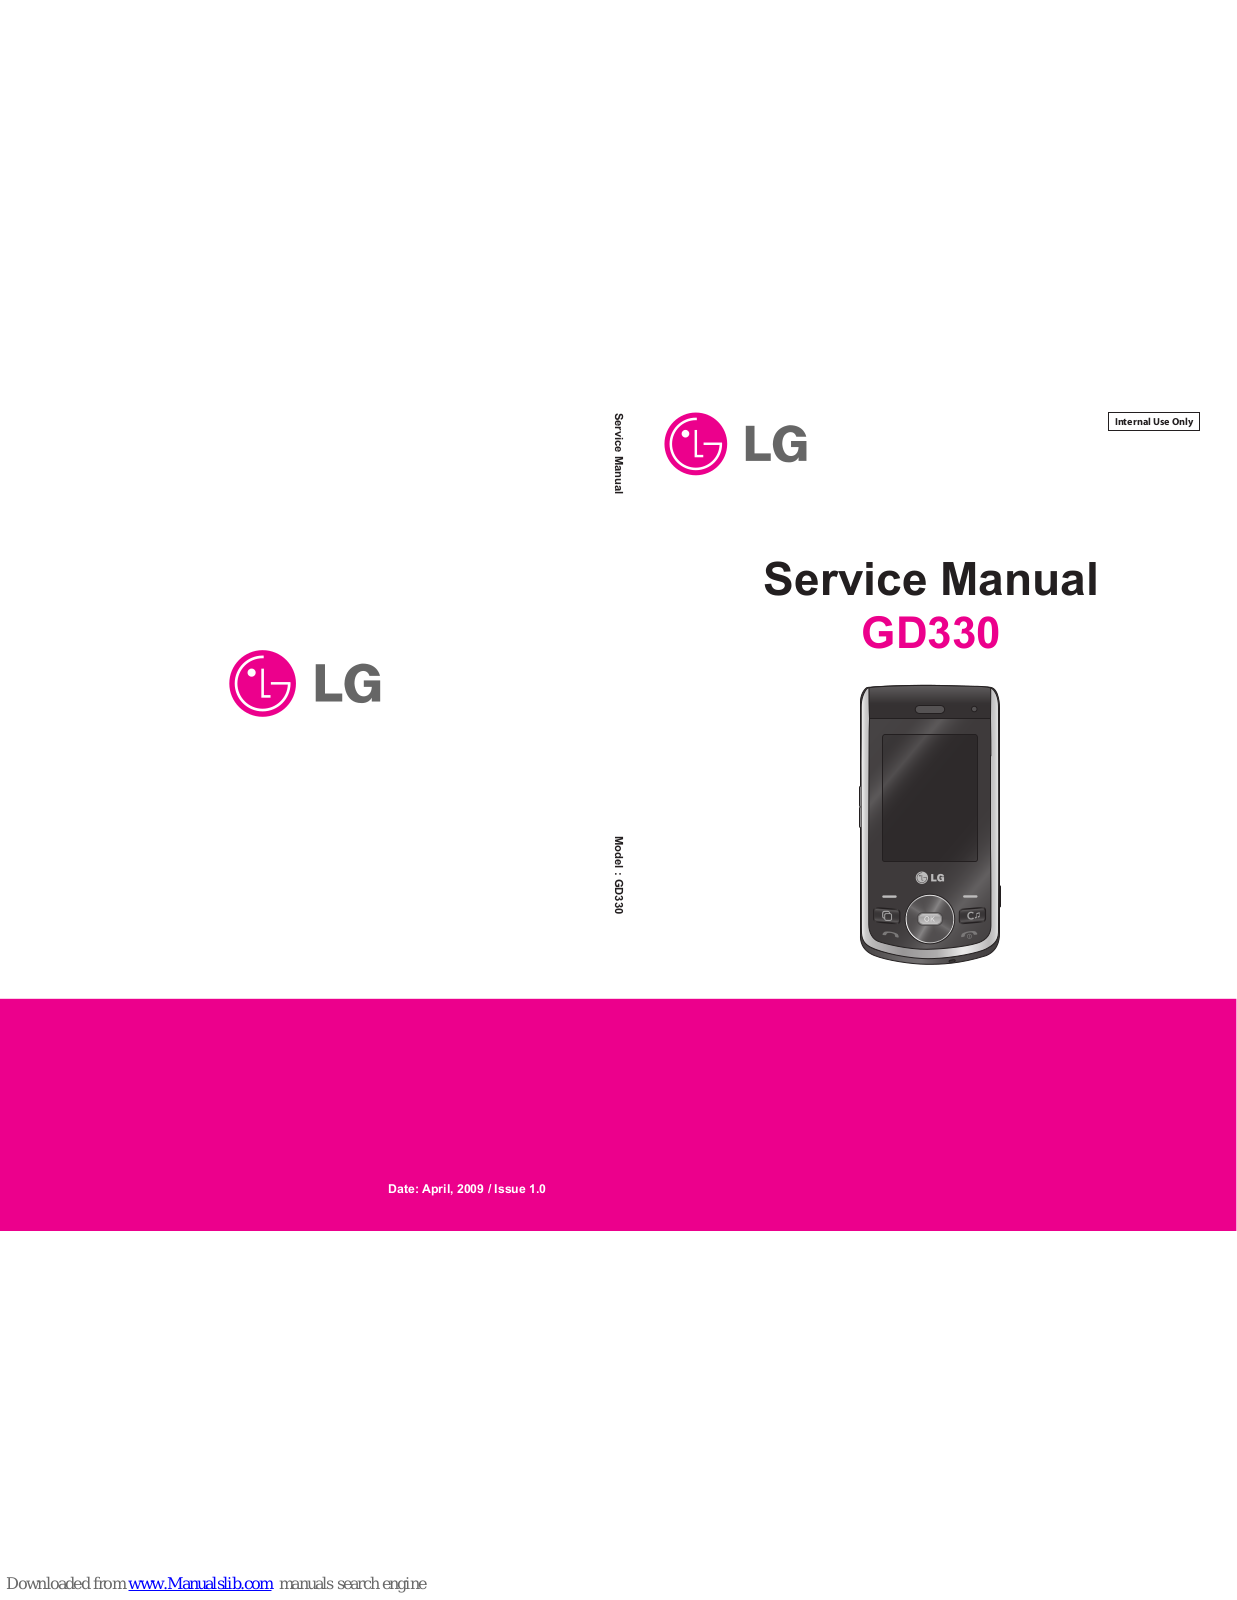 LG GD330 Service Manual